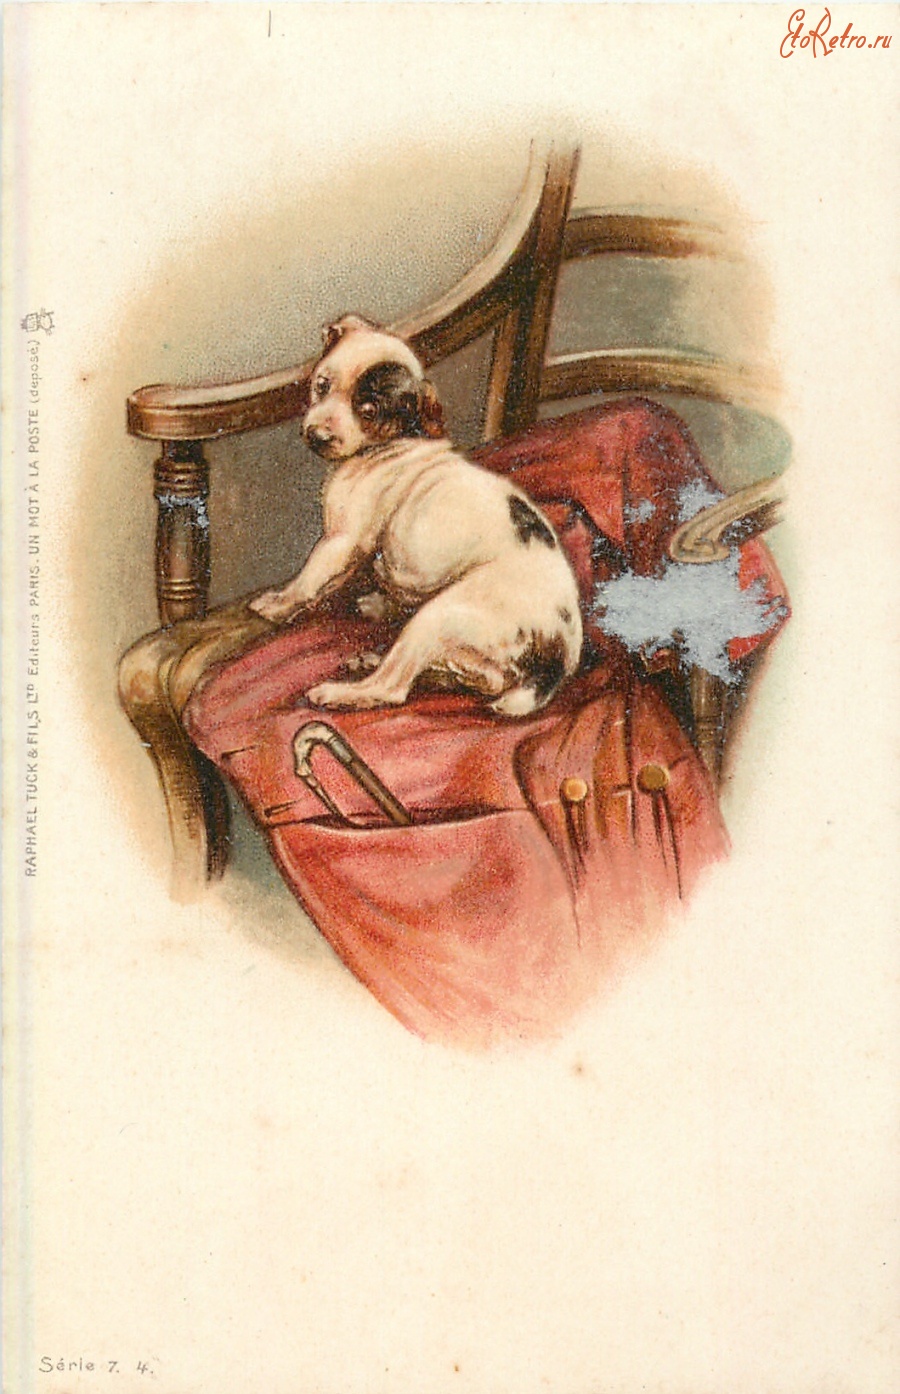 Ретро открытки - Маленькая собачка на стуле